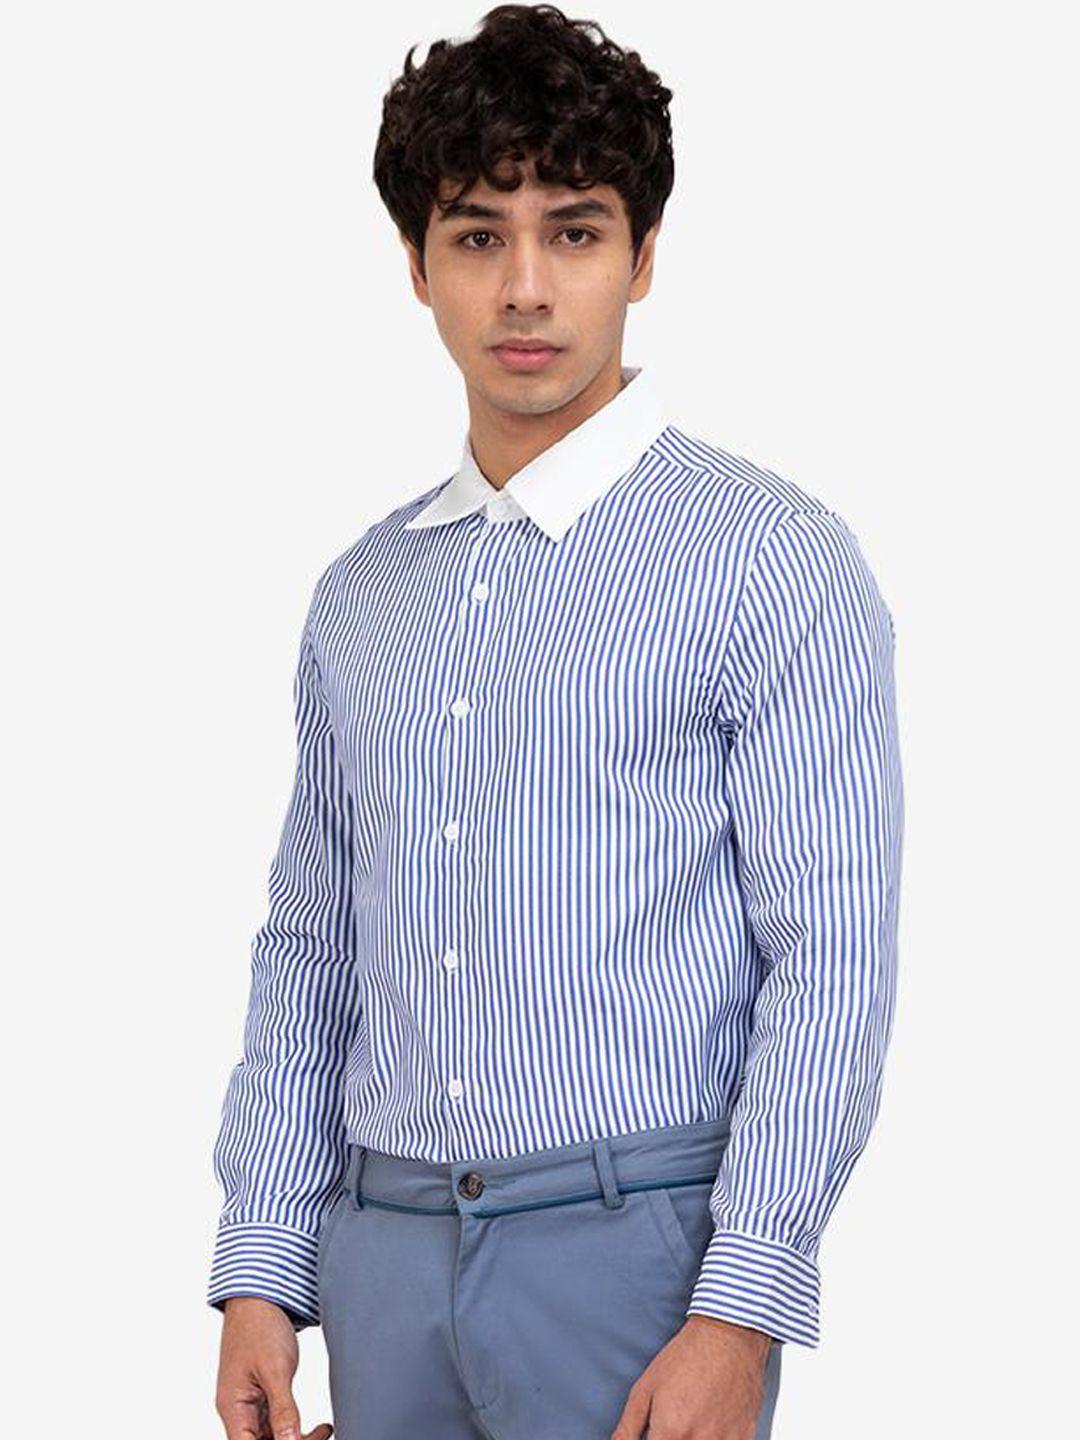 zalora basics men navy blue & white striped regular fit casual shirt